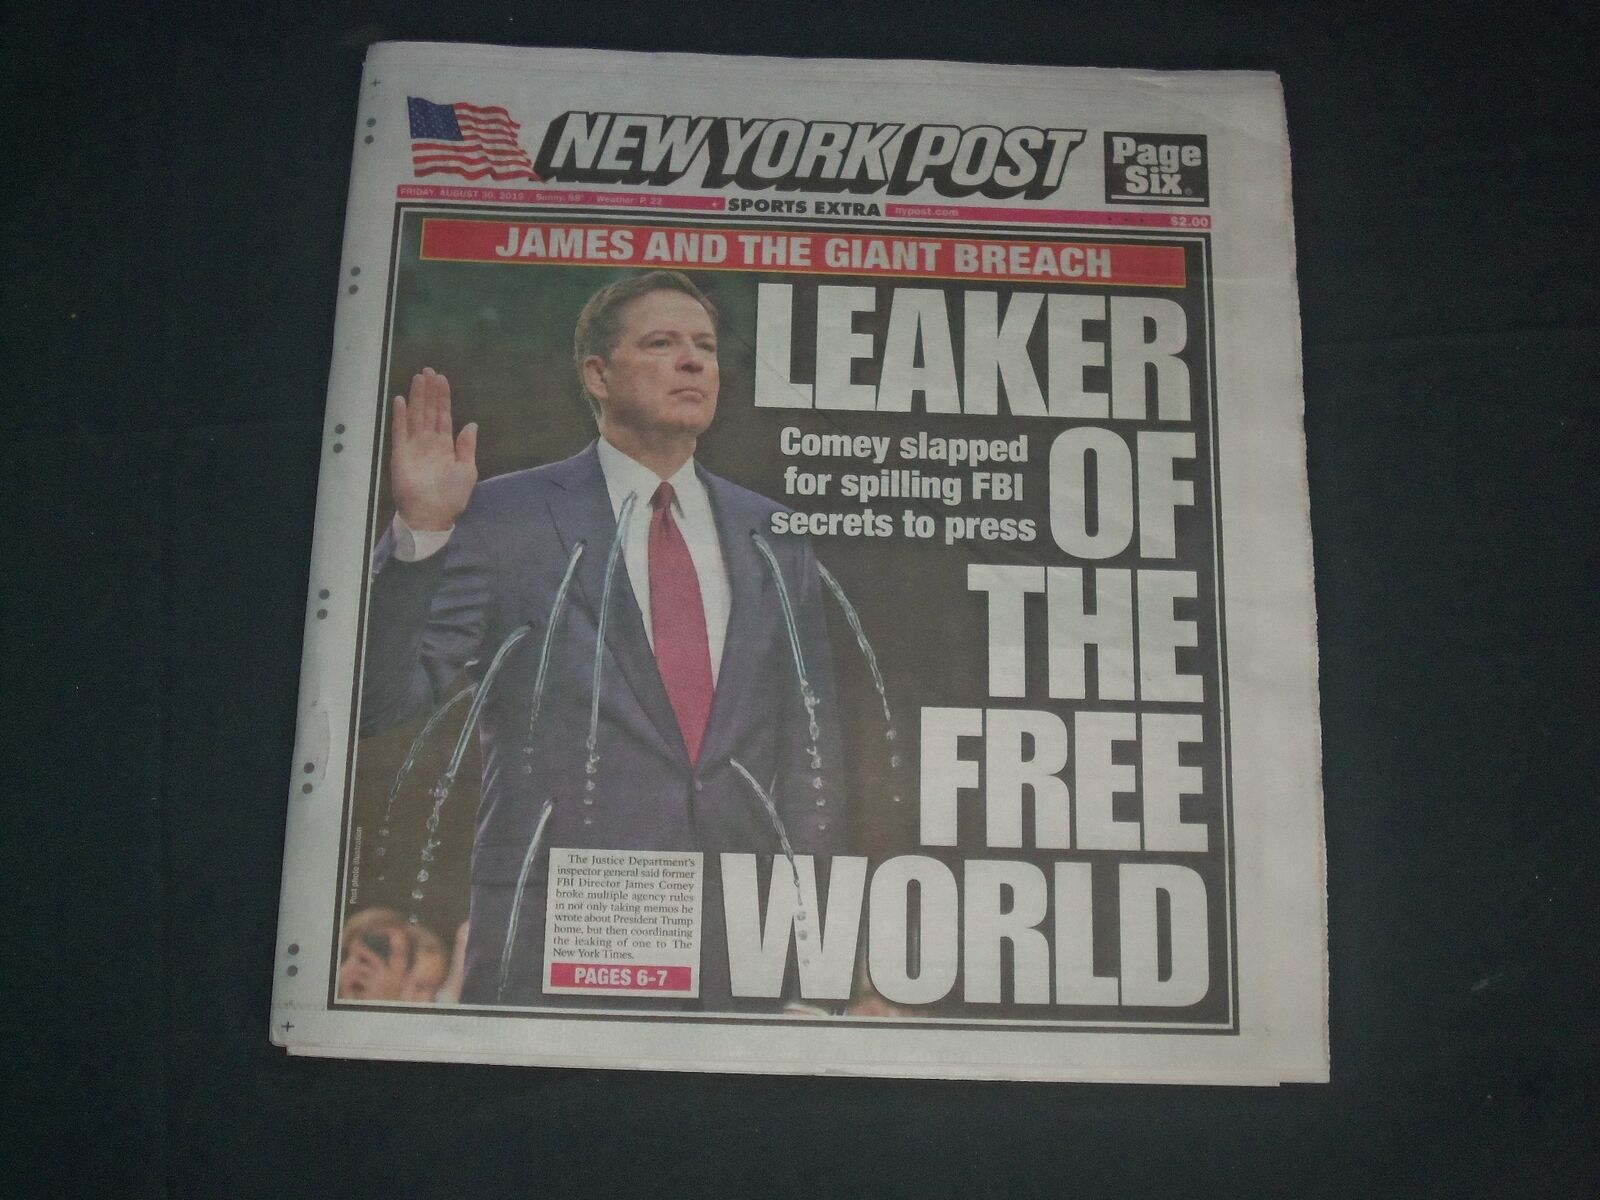 2019 AUGUST 30 NEW YORK POST NEWSPAPER -JAMES COMEY LEAKED FBI SECRETS TO PRESS